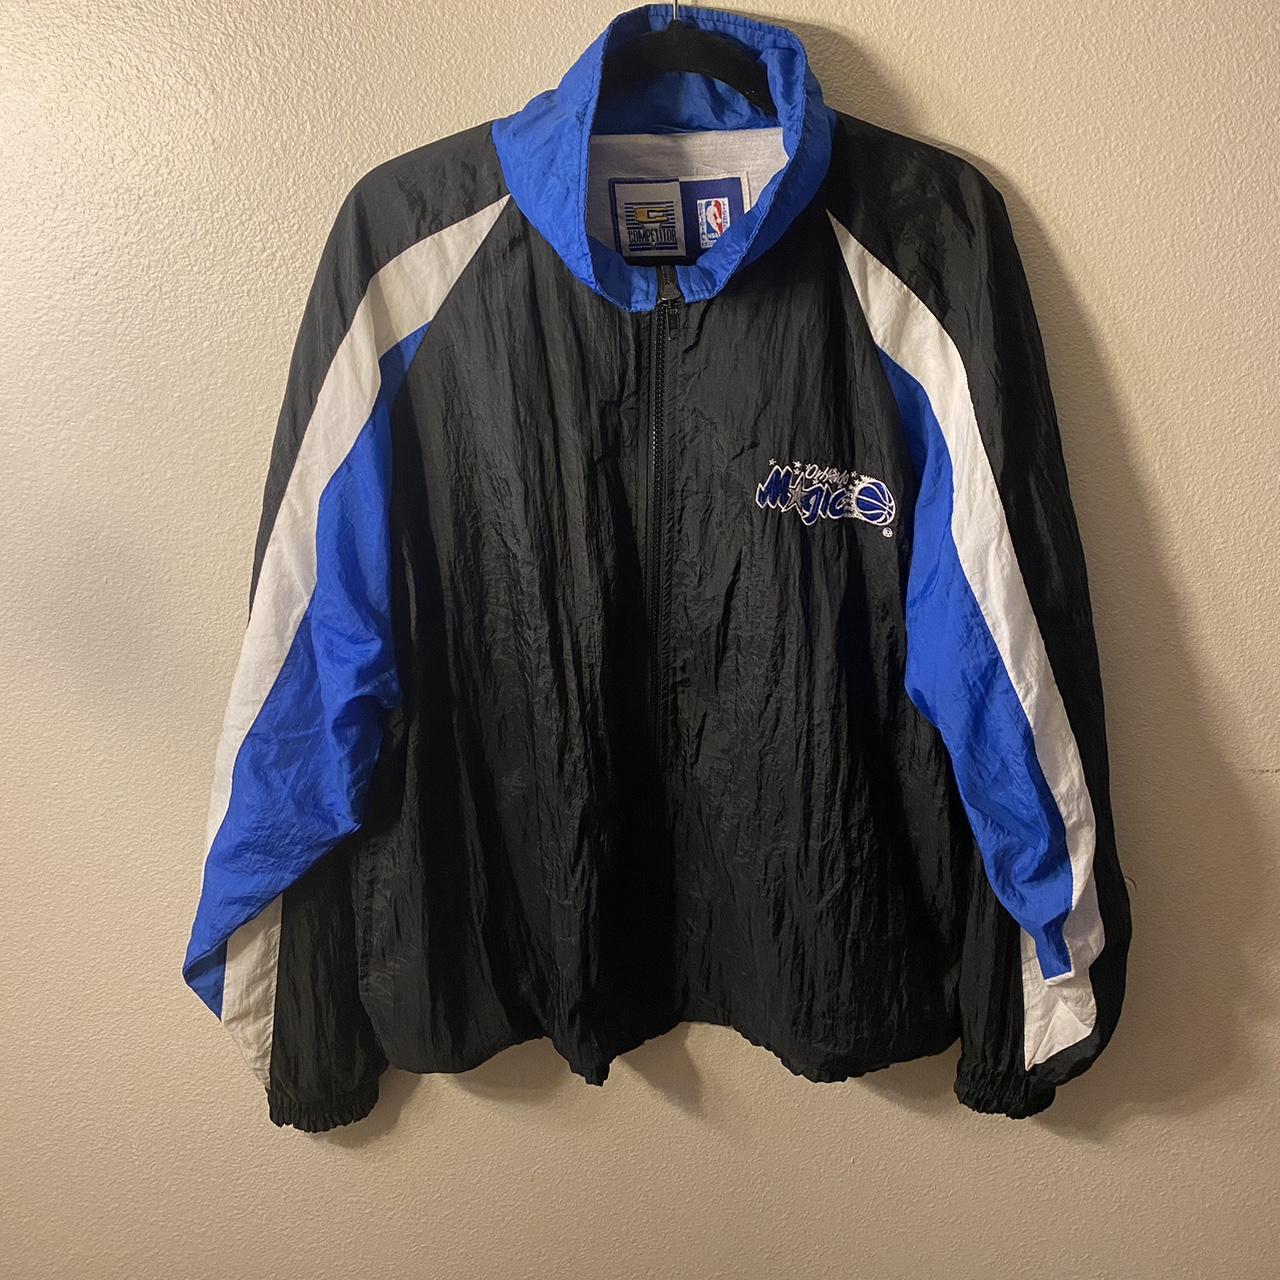 Vintage Orlando Magic jacket by a division of starter, Men's